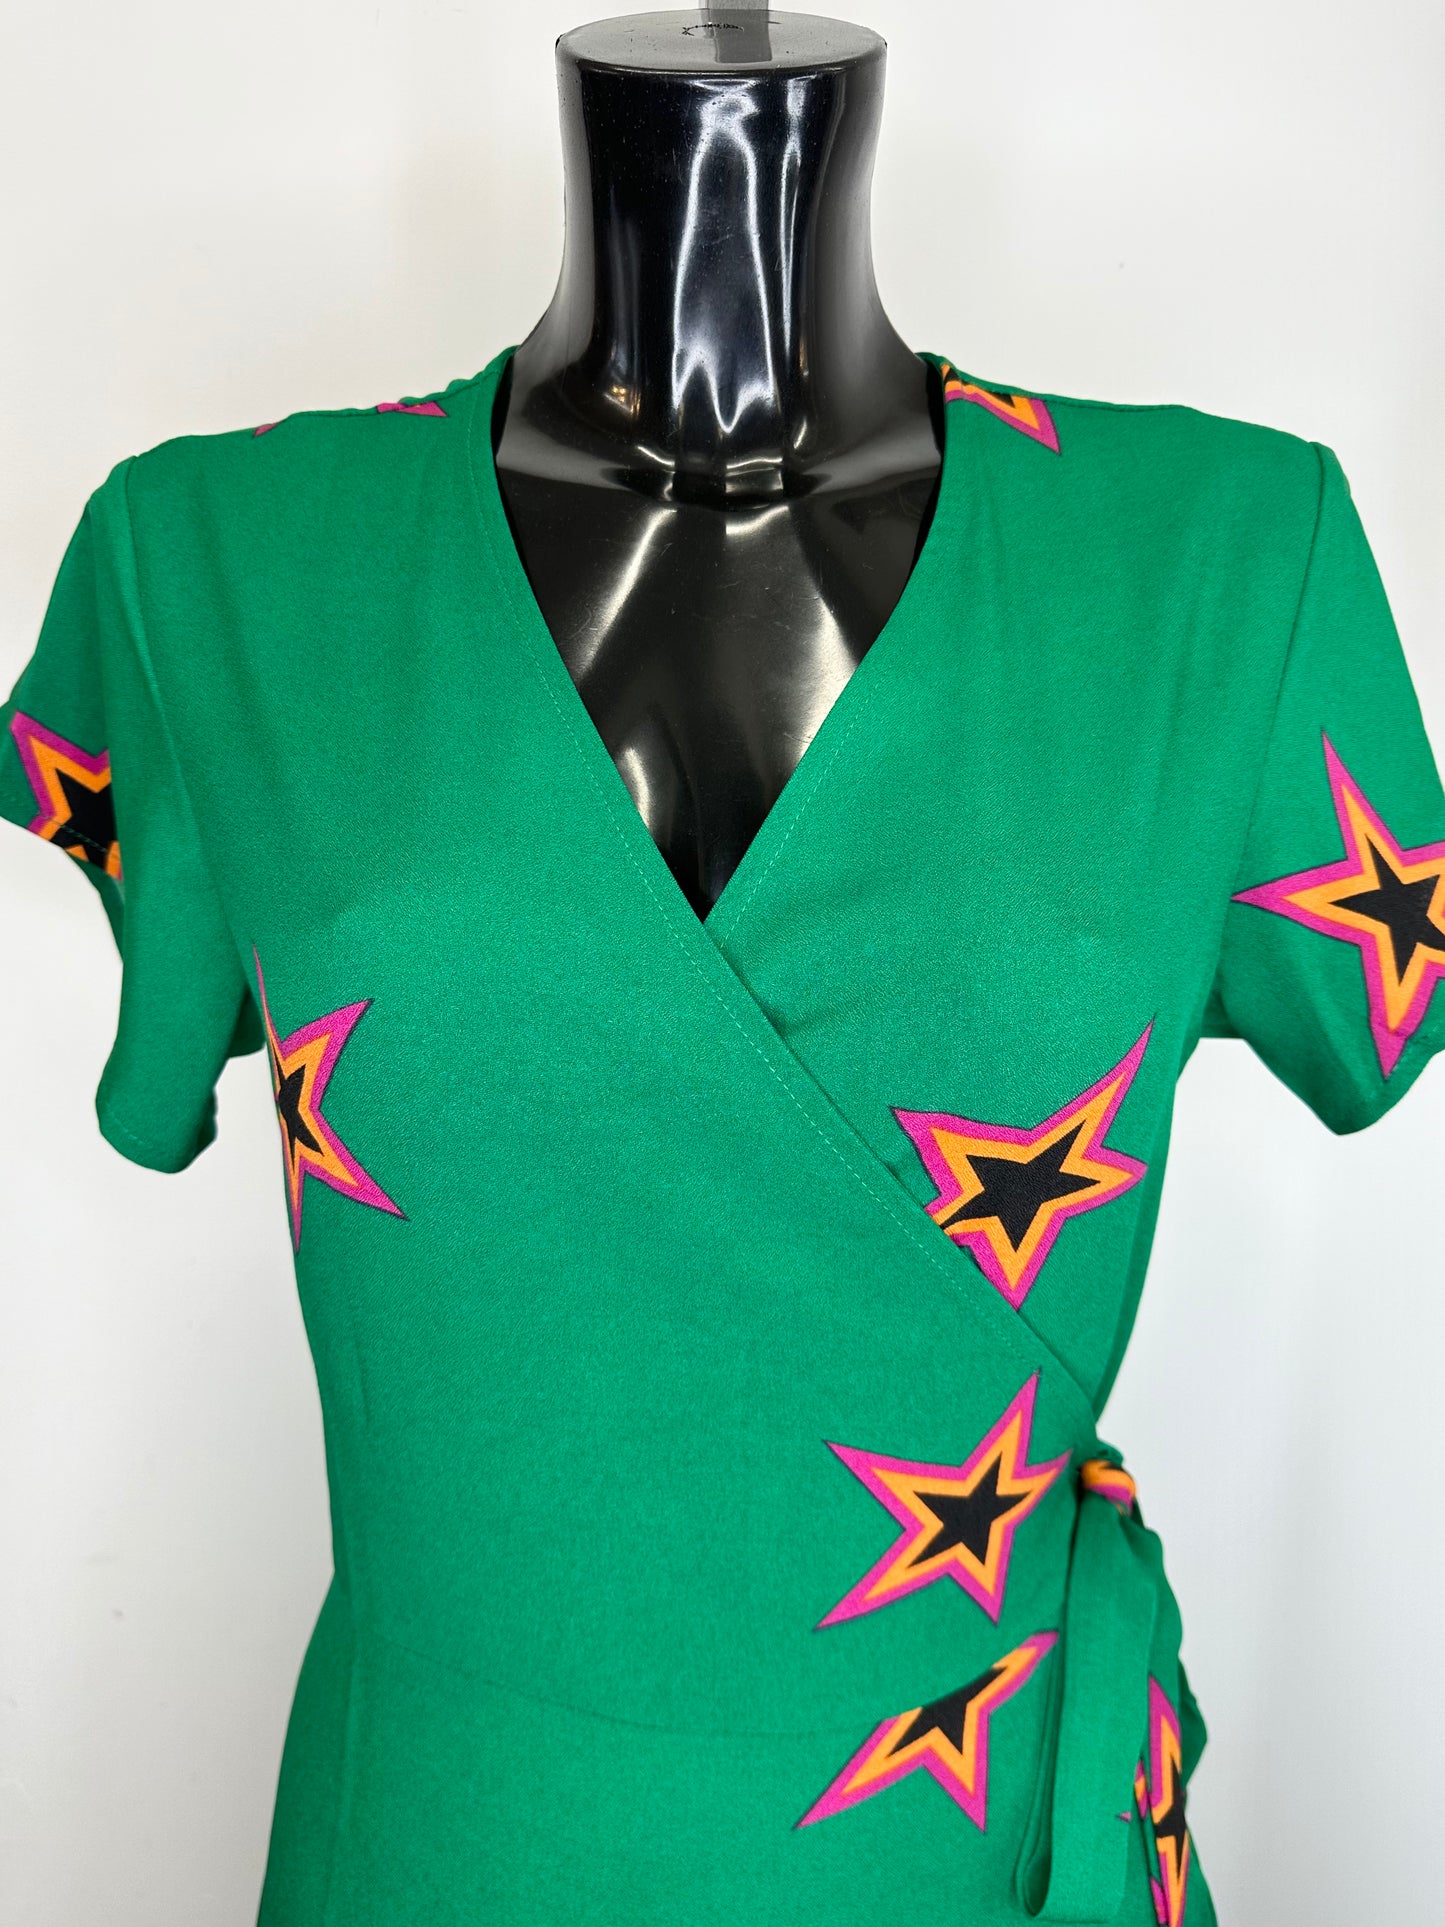 Green star print wrap dress